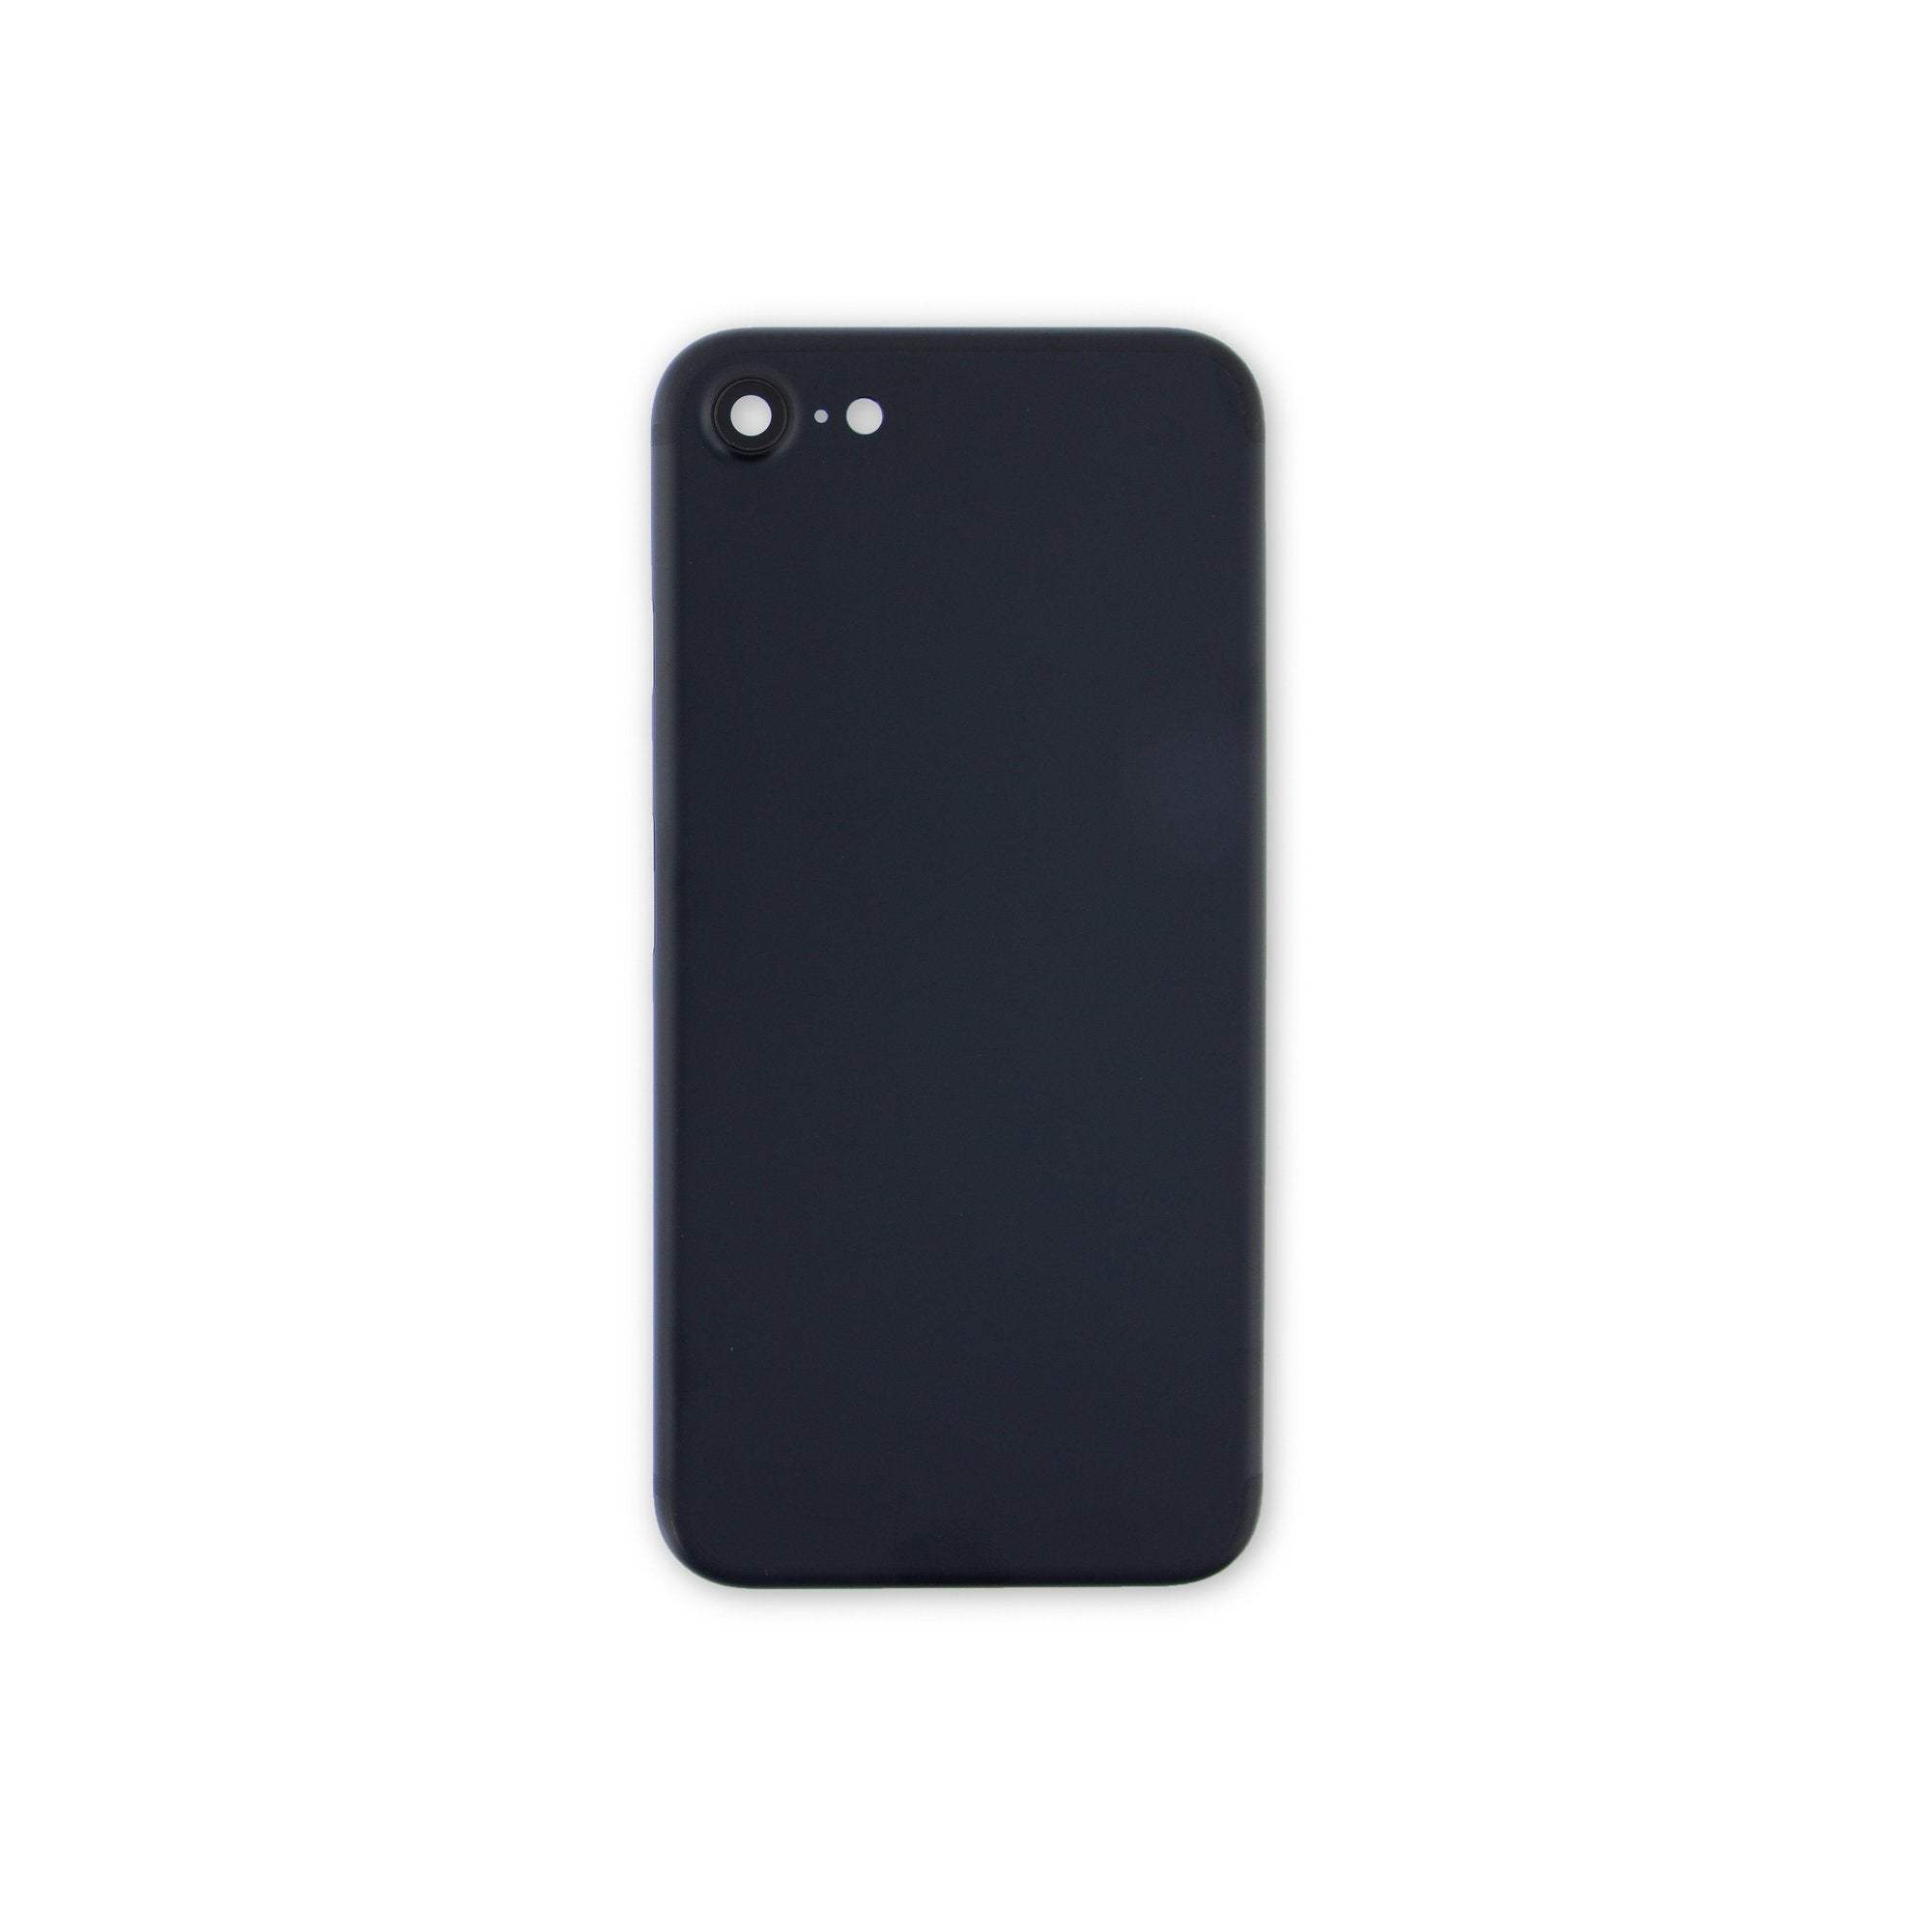 iPhone 7 Blank Rear Case Black New